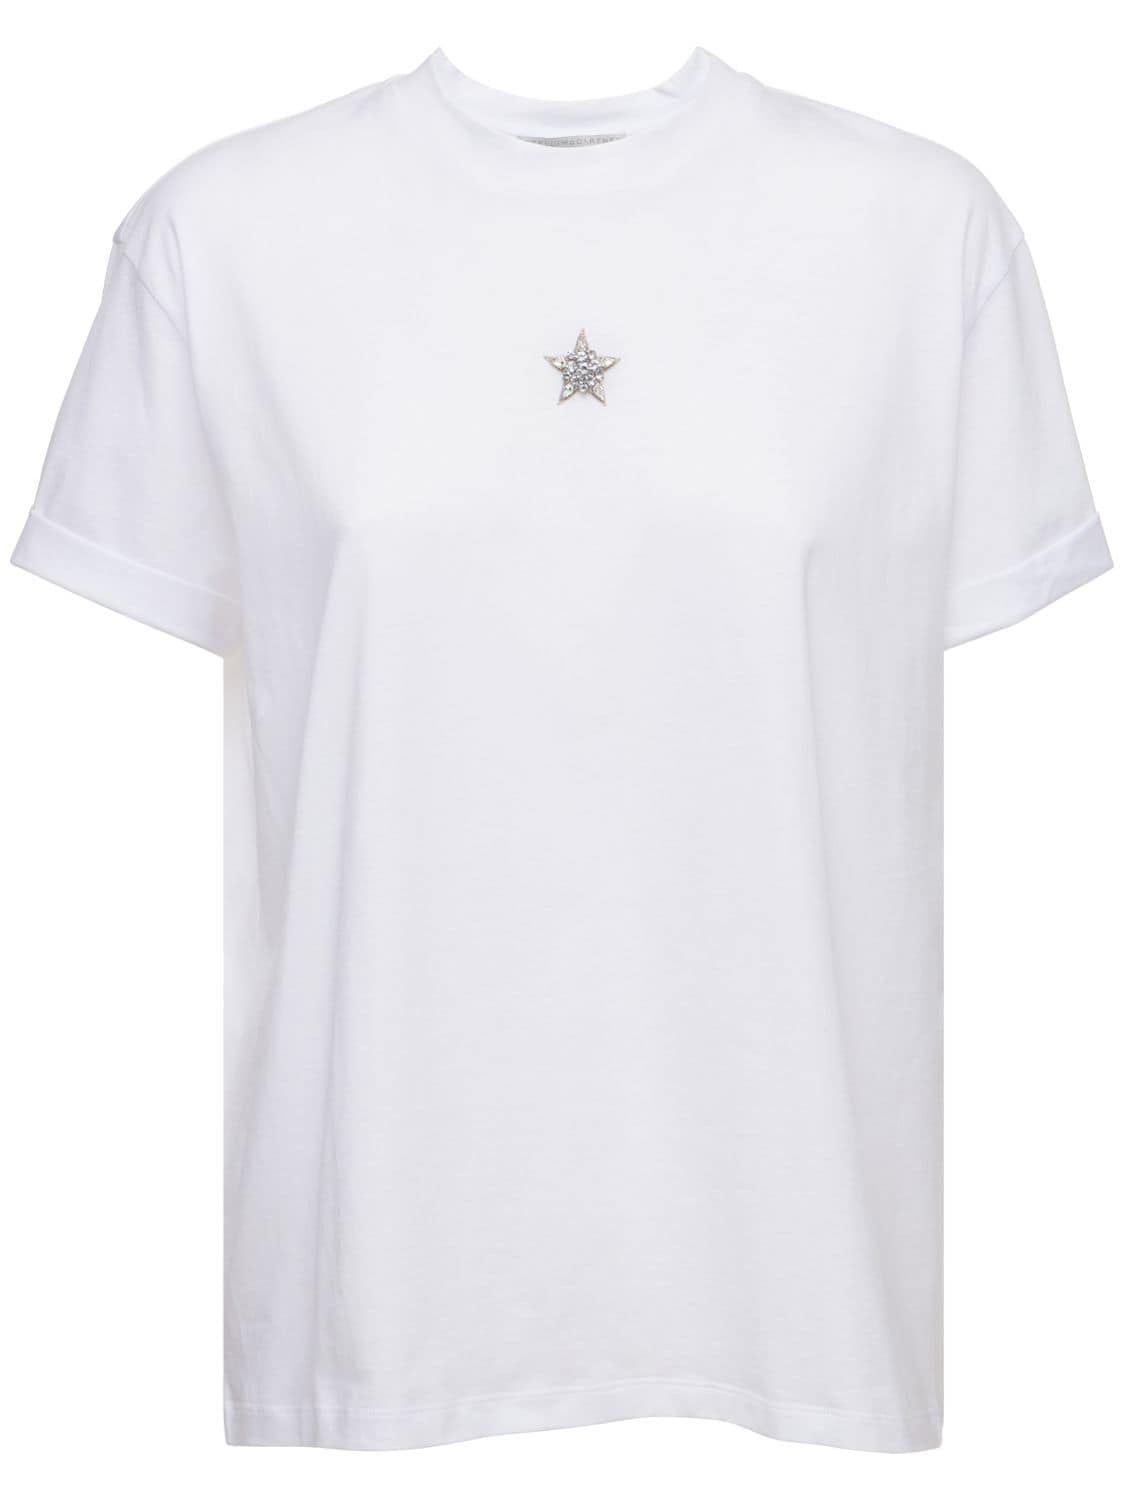 Crystal Star Cotton Jersey T-shirt